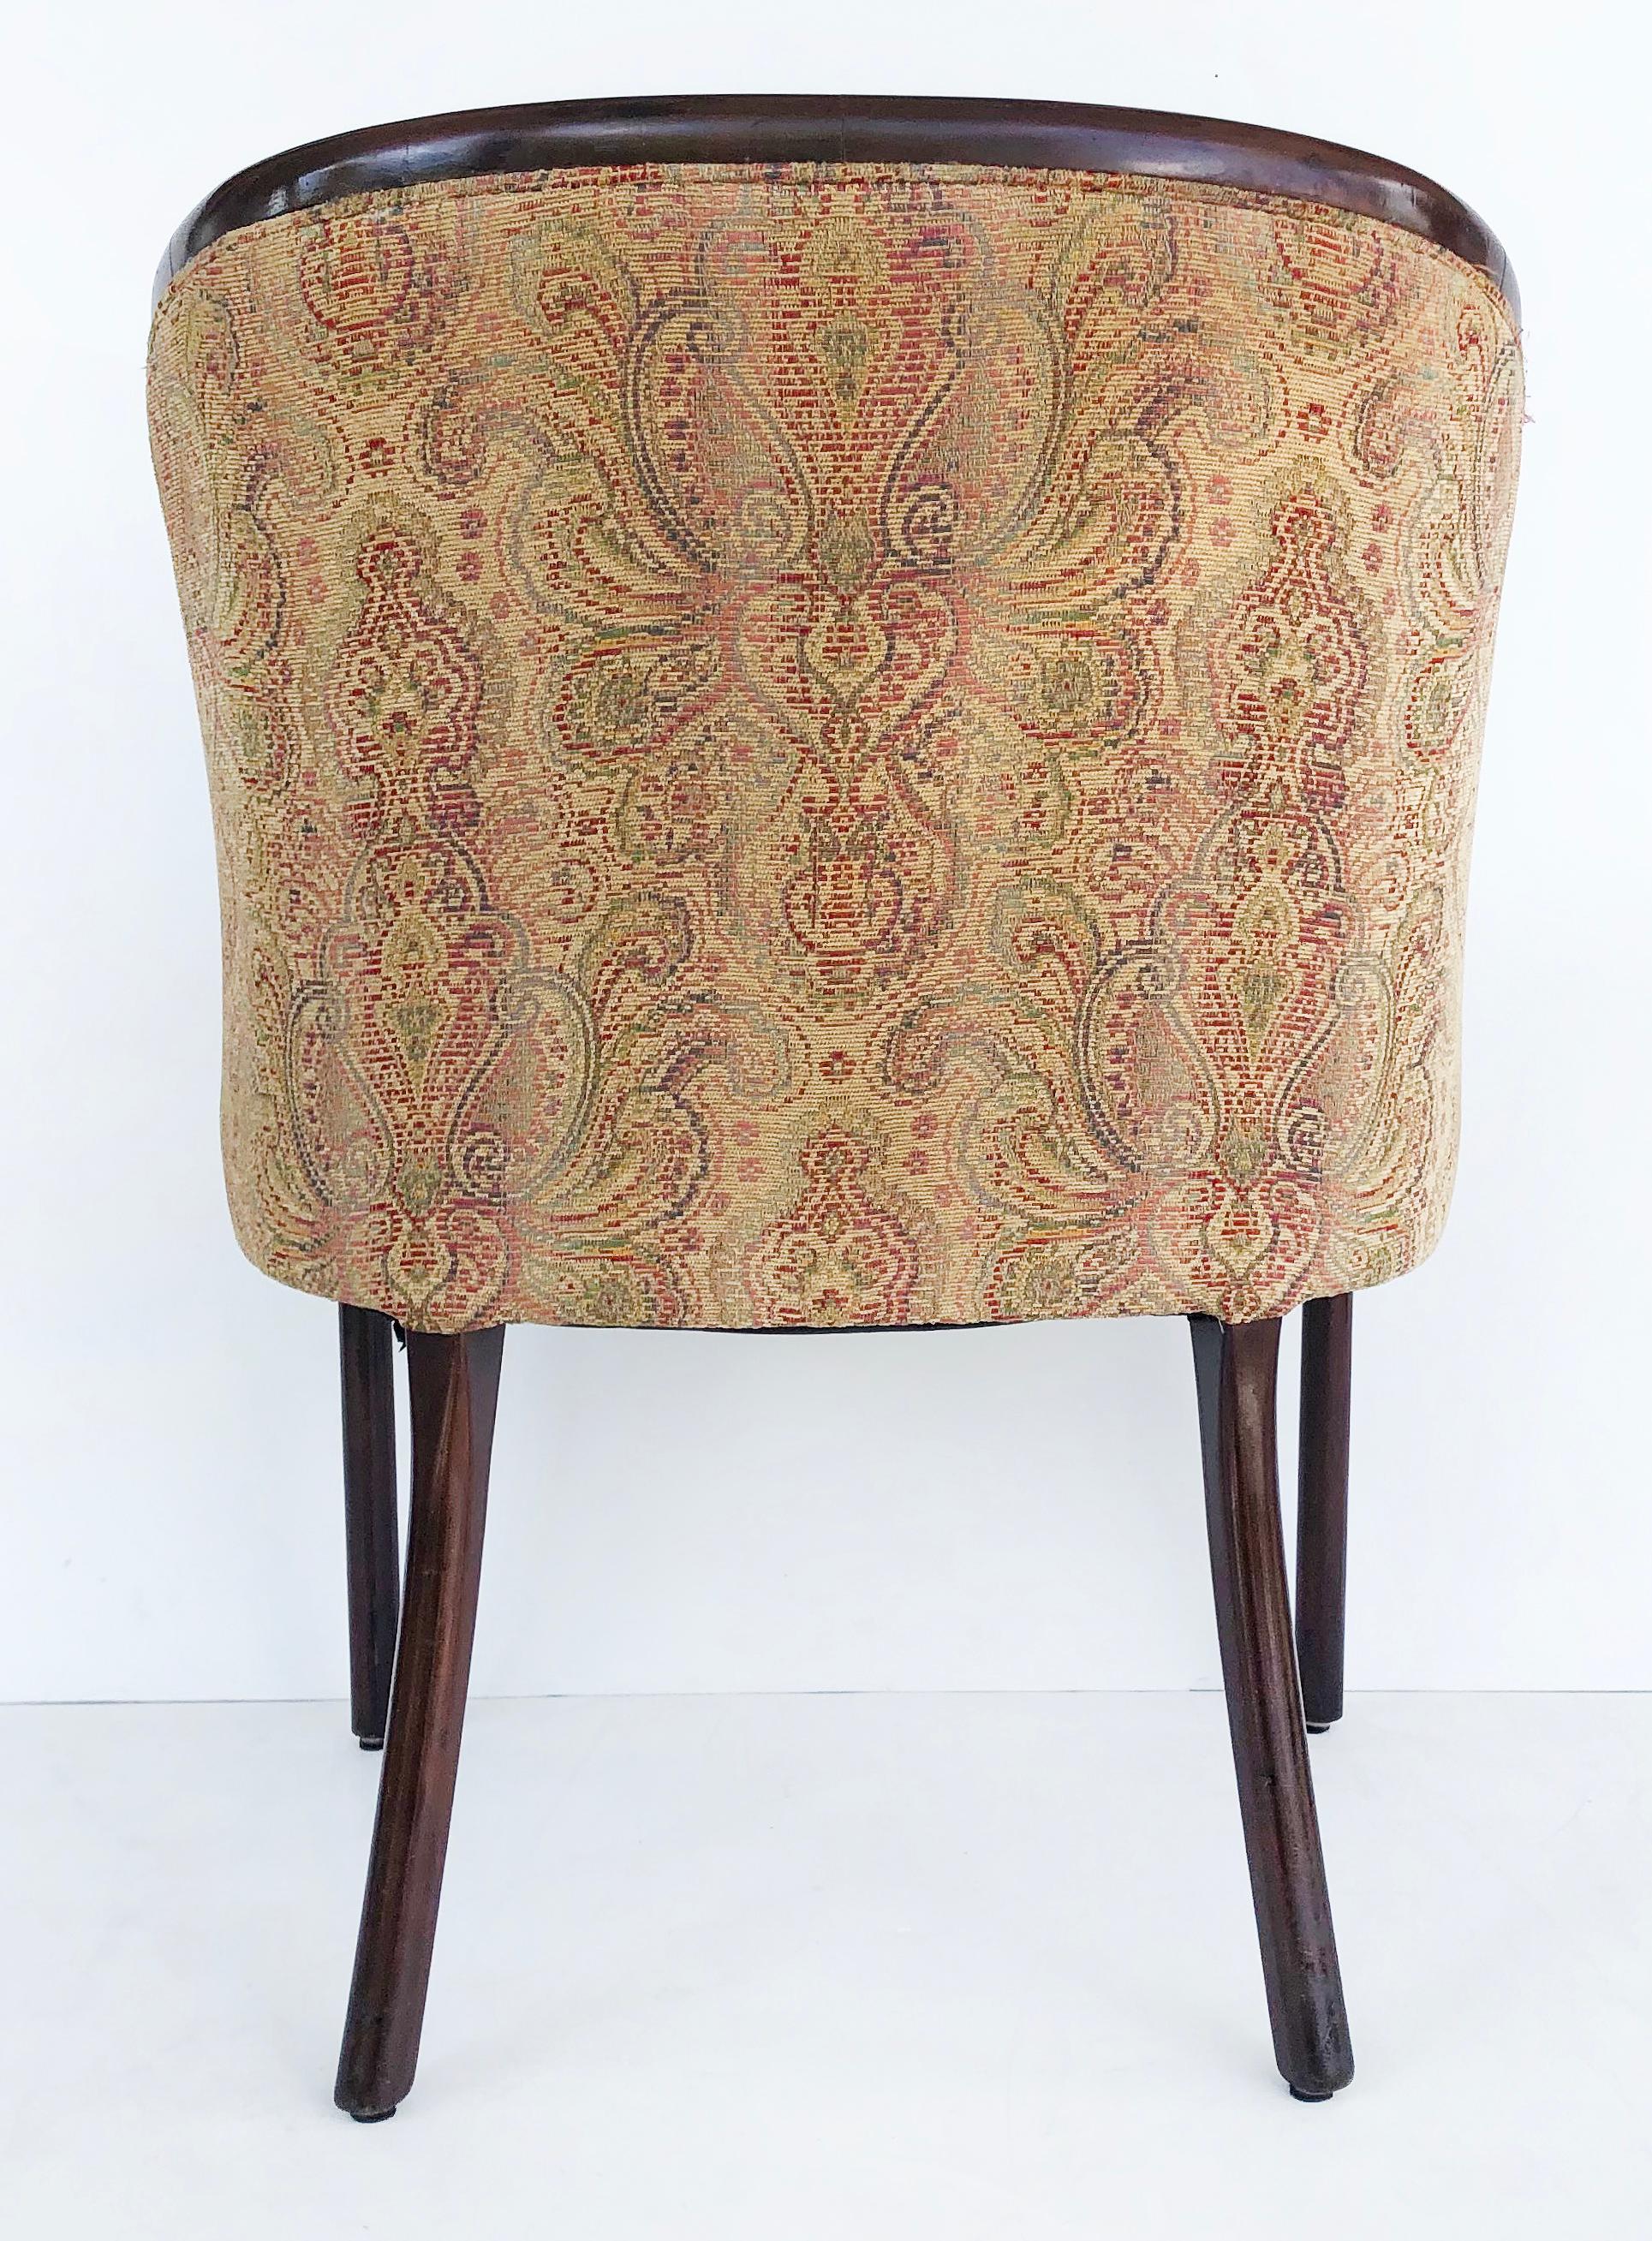 Vintage Ward Bennett Brickell Barrel Back Chairs, Upholstered Pair 1